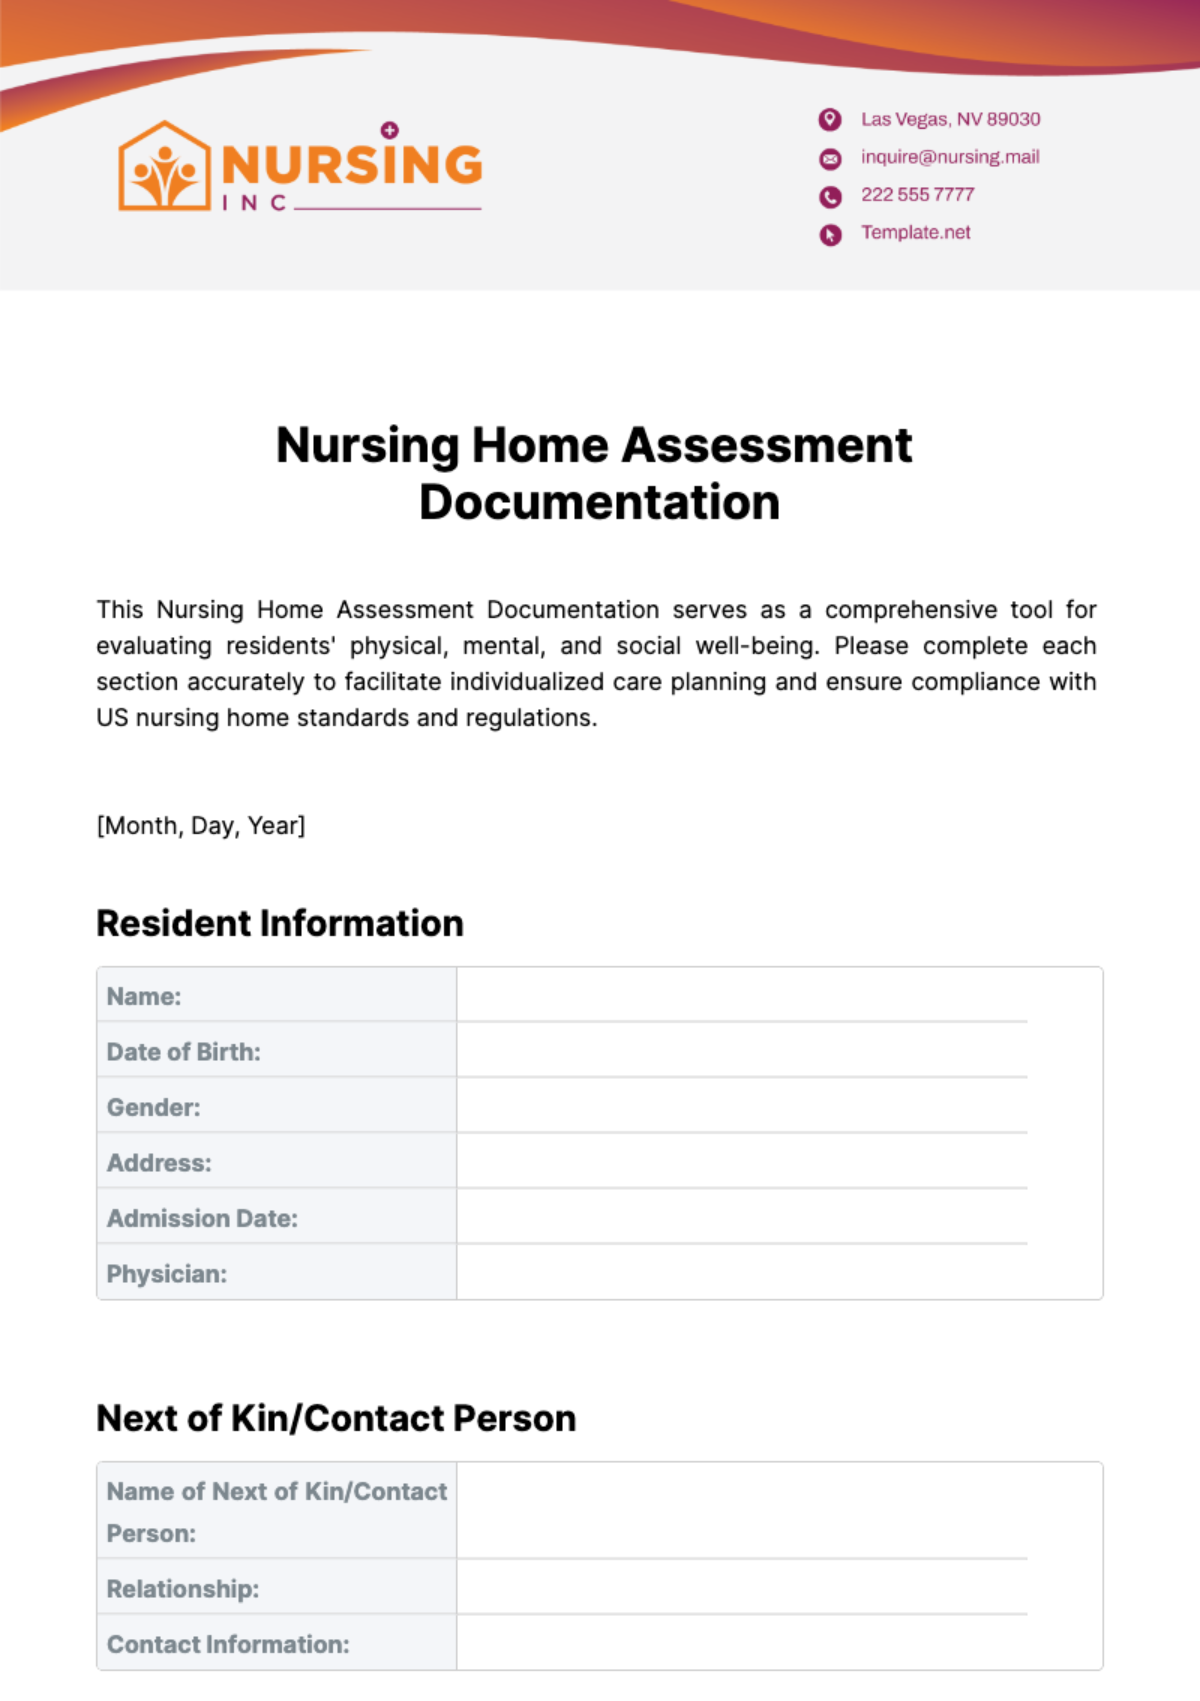 Nursing Home Assessment Documentation Template